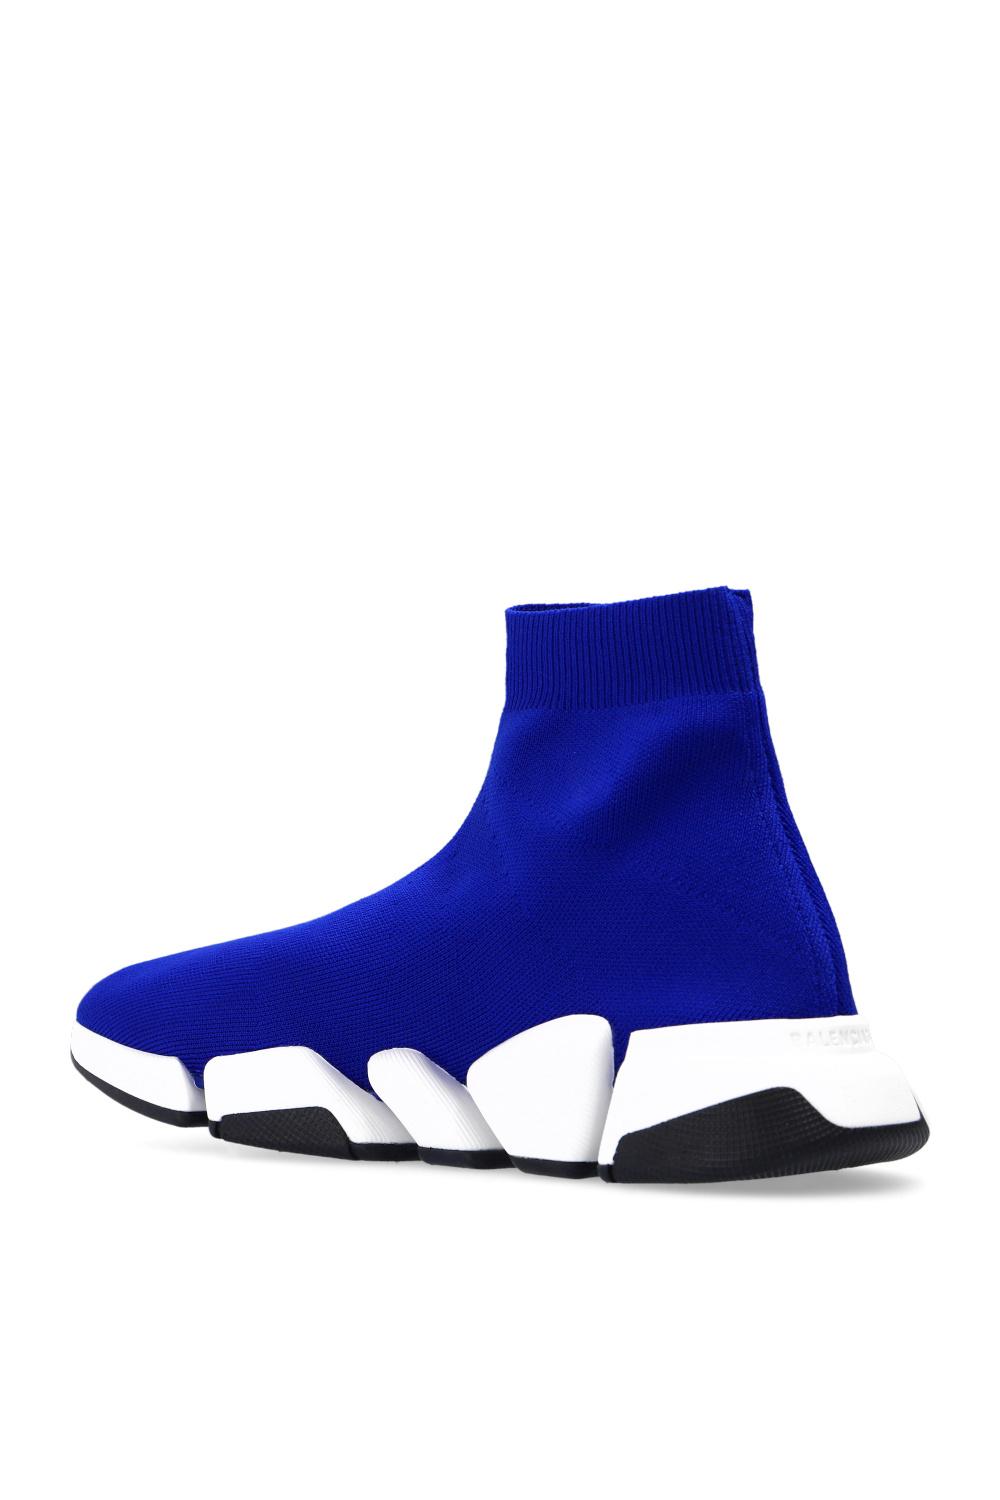 Balenciaga 'speed 2.0 Lt' Sock Sneakers in Navy Blue (Blue) for Men | Lyst